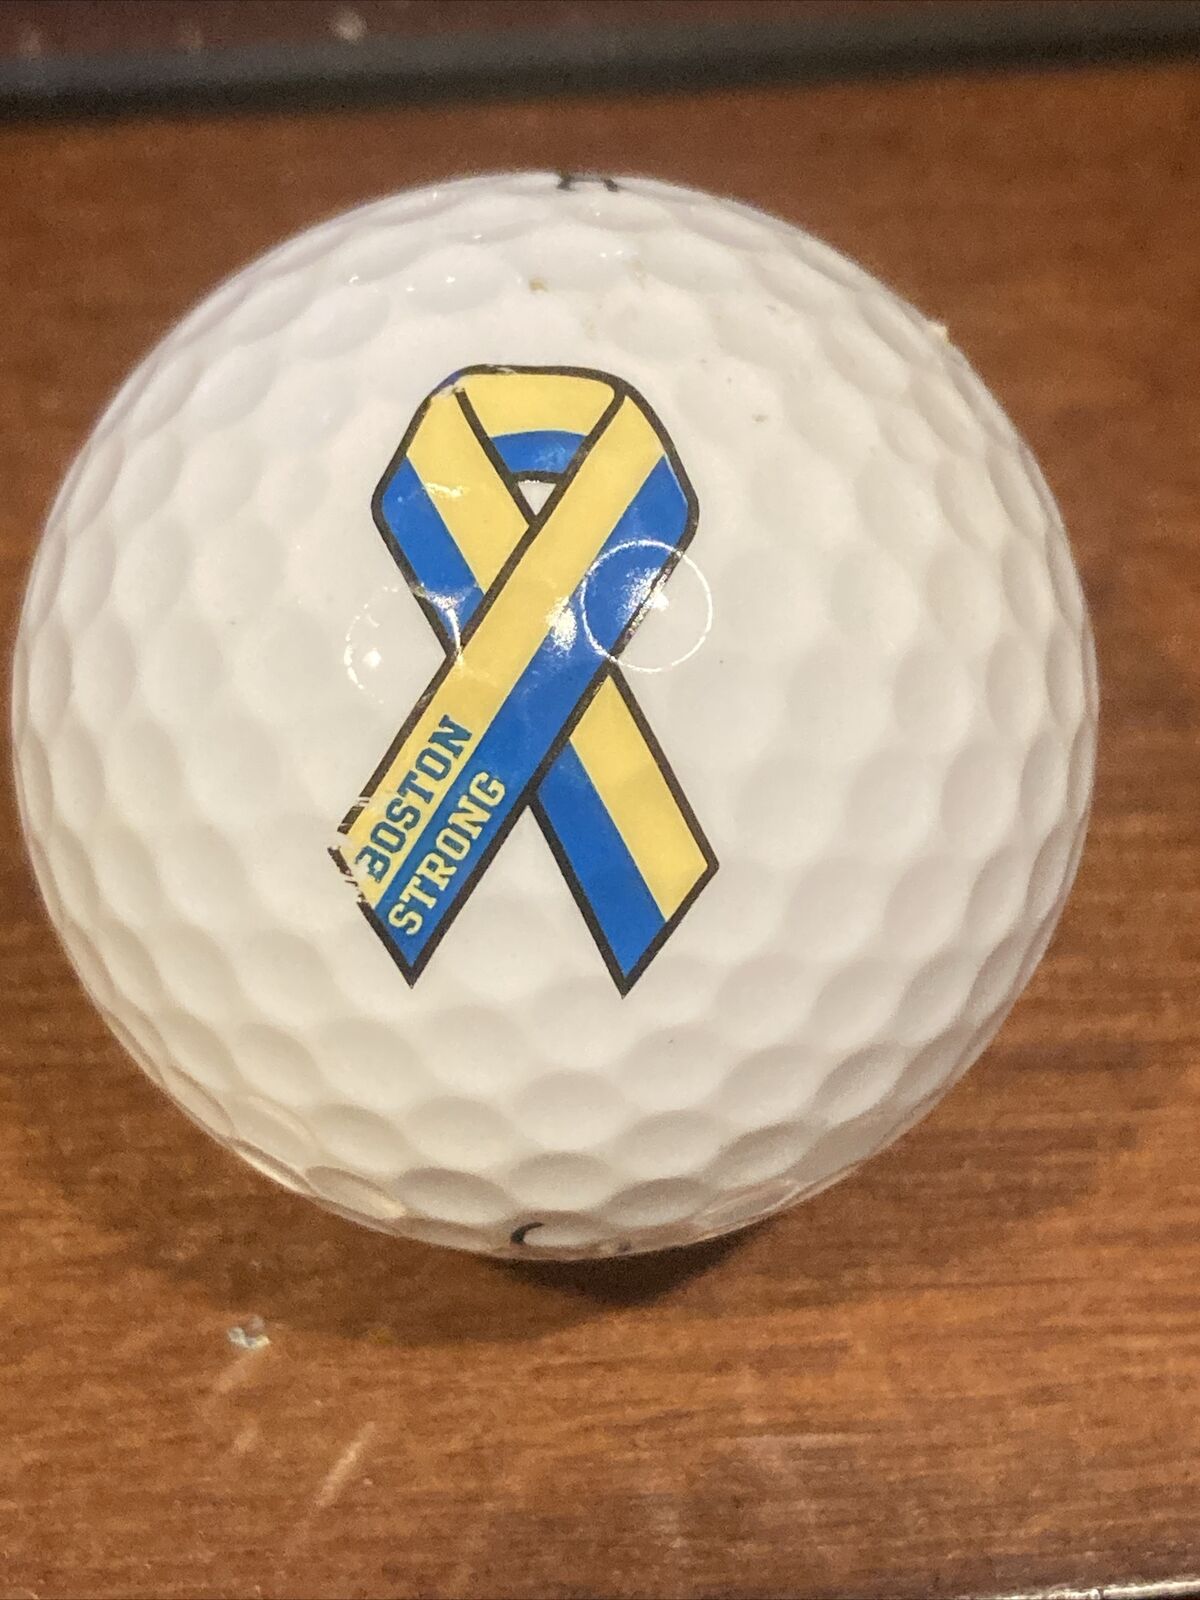 Titleist Golf Ball w/ Logo - Boston Strong Yellow and Blue Ribbon